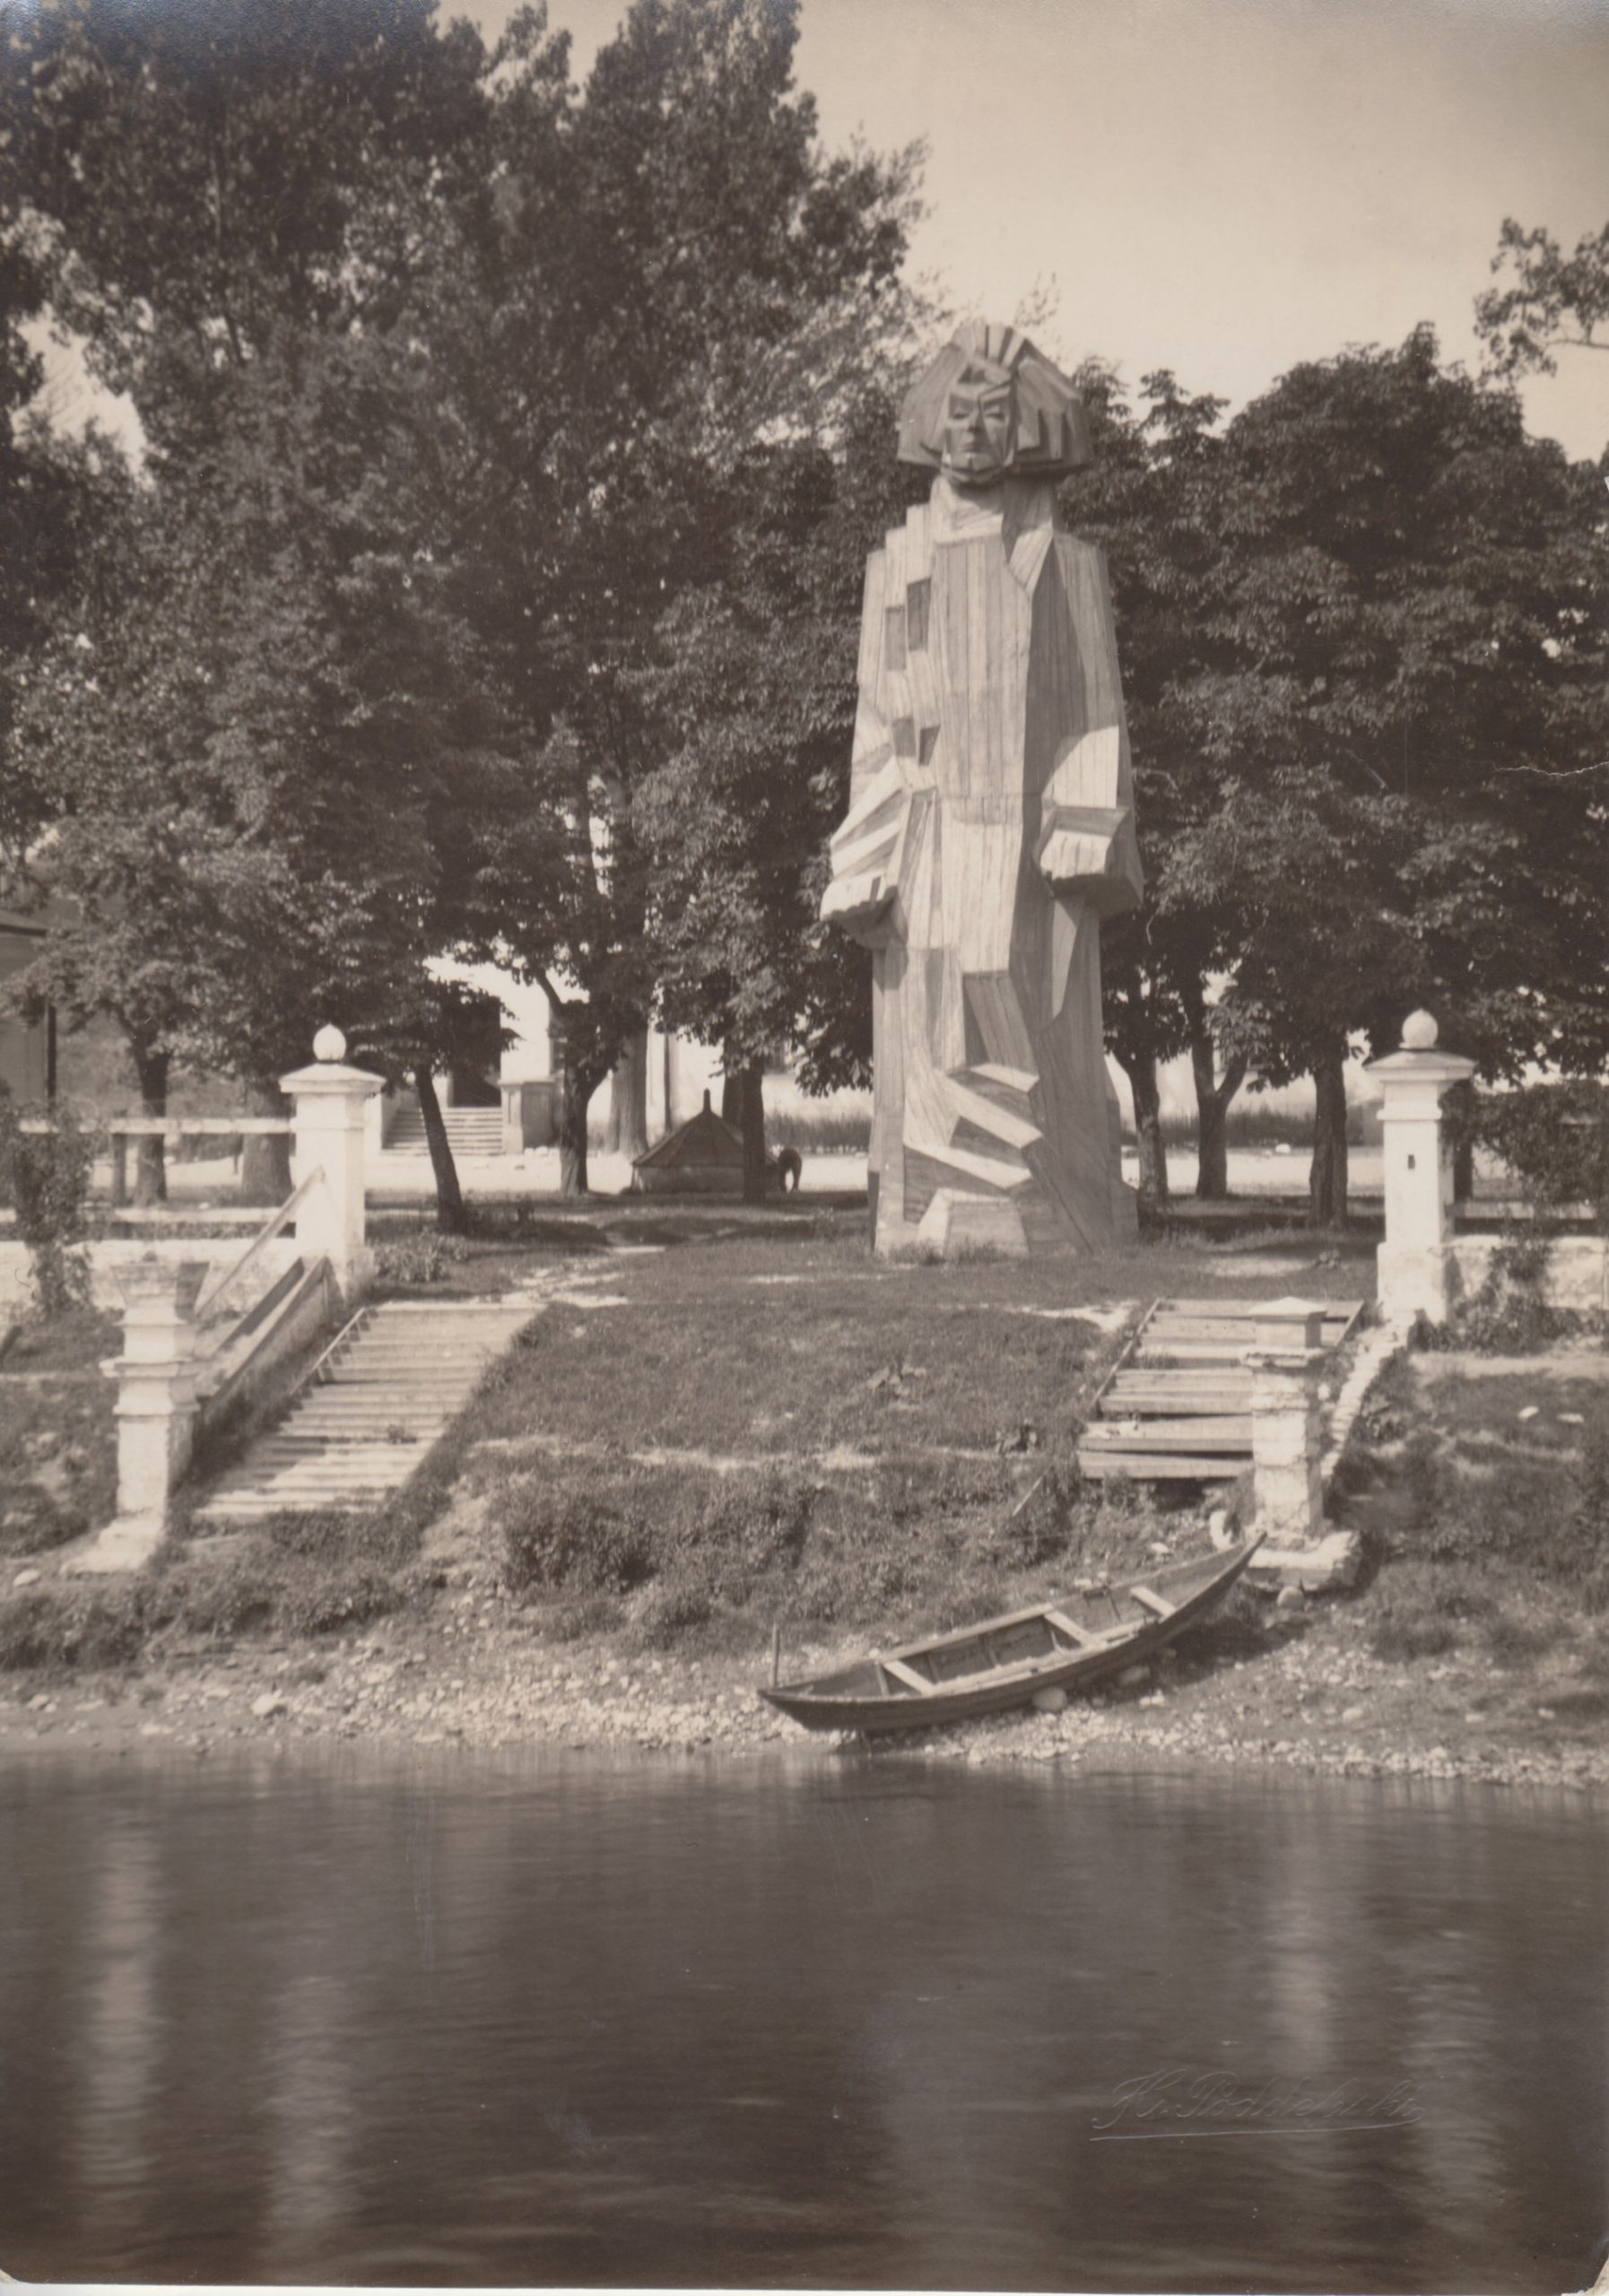 Adomo Mickevičiaus-Pranašo skulptūra-maketas, stovėjęs Vilniuje 1924-1939 m. Skulptorius Zbignevas Pronaška (Zbigniew Pronaszko). Foto Henriko Poddenbskio (Henryk Poddębski). Apie 1930 m. MLLM 132828